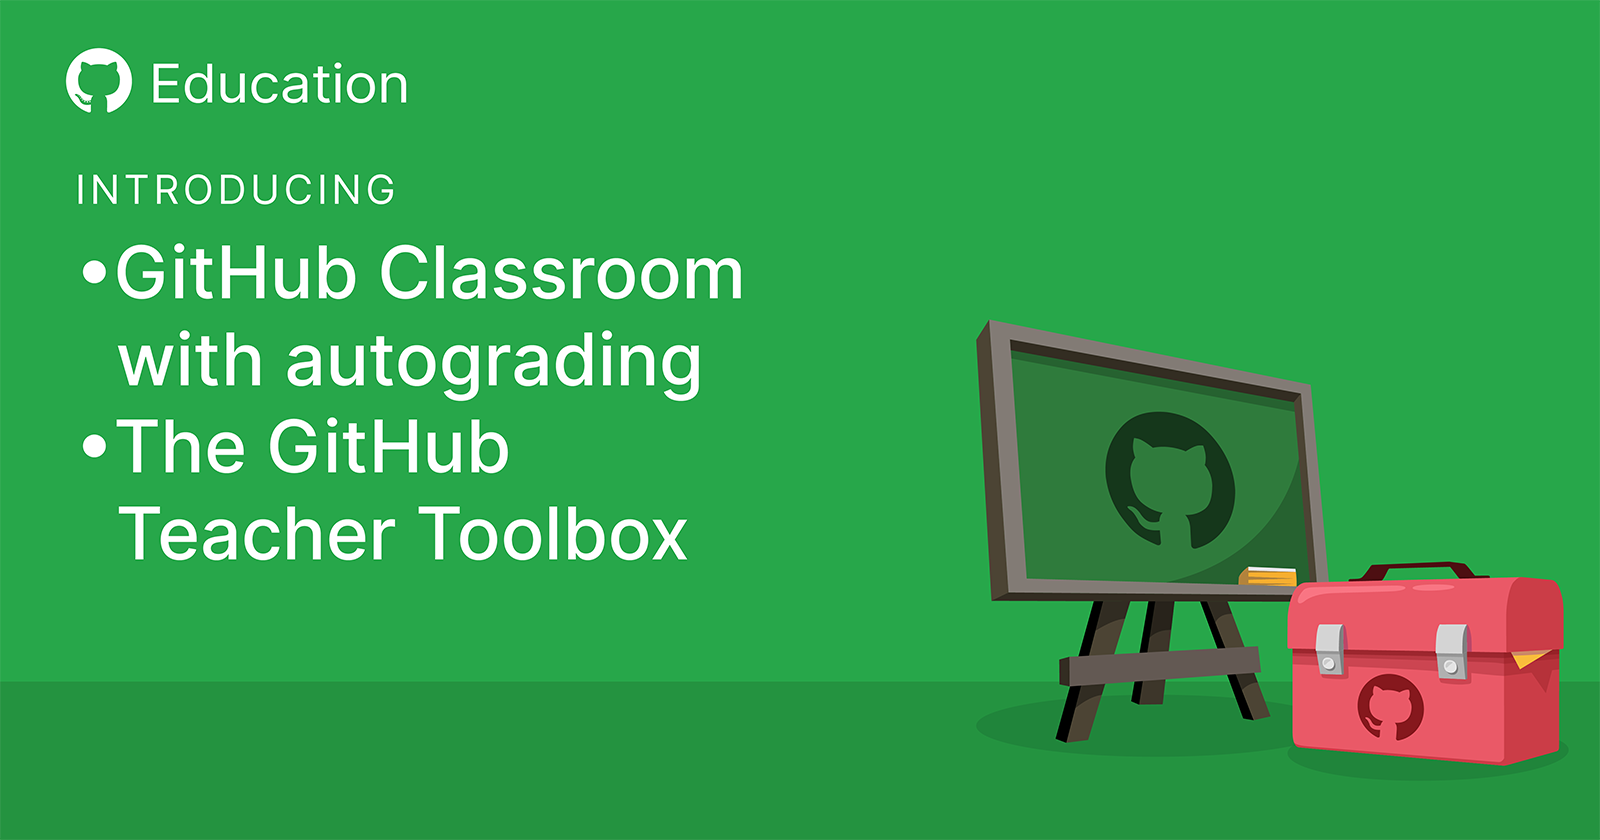 Introducing autograding for GitHub Classroom and the GitHub Teacher Toolbox